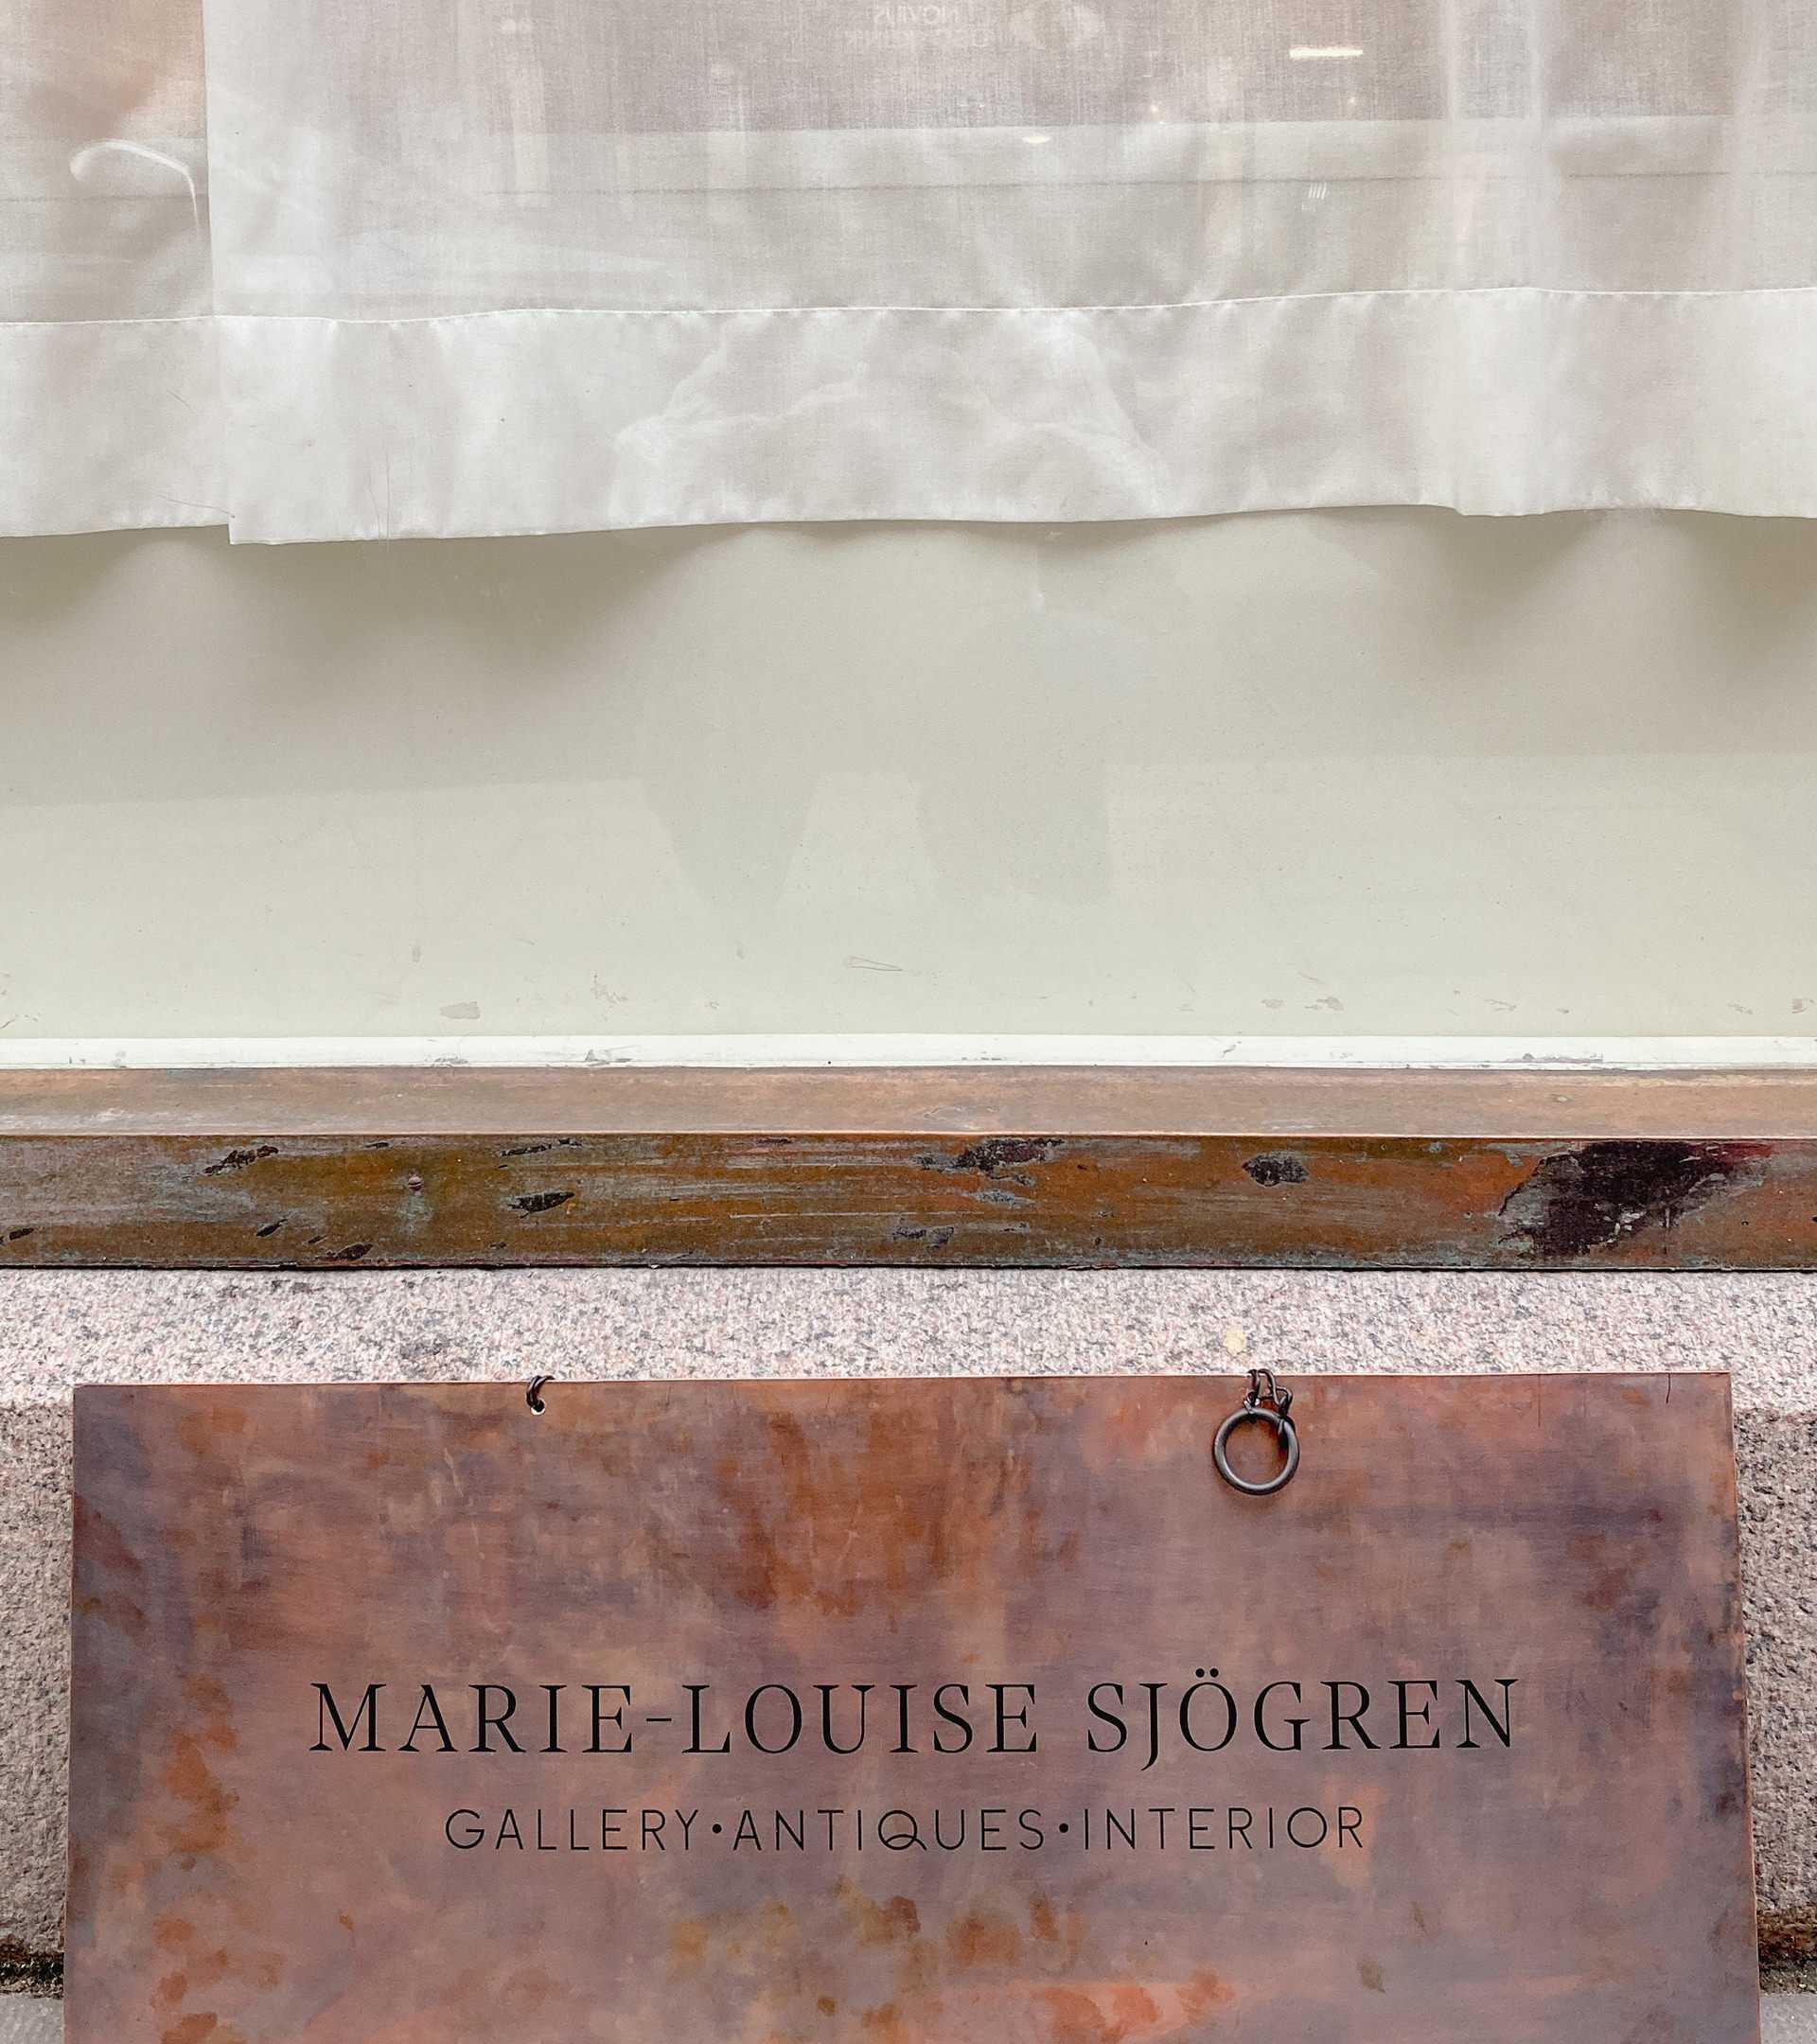 Storefront sign for Marie-Louise Sjögren designed by Studio Poi